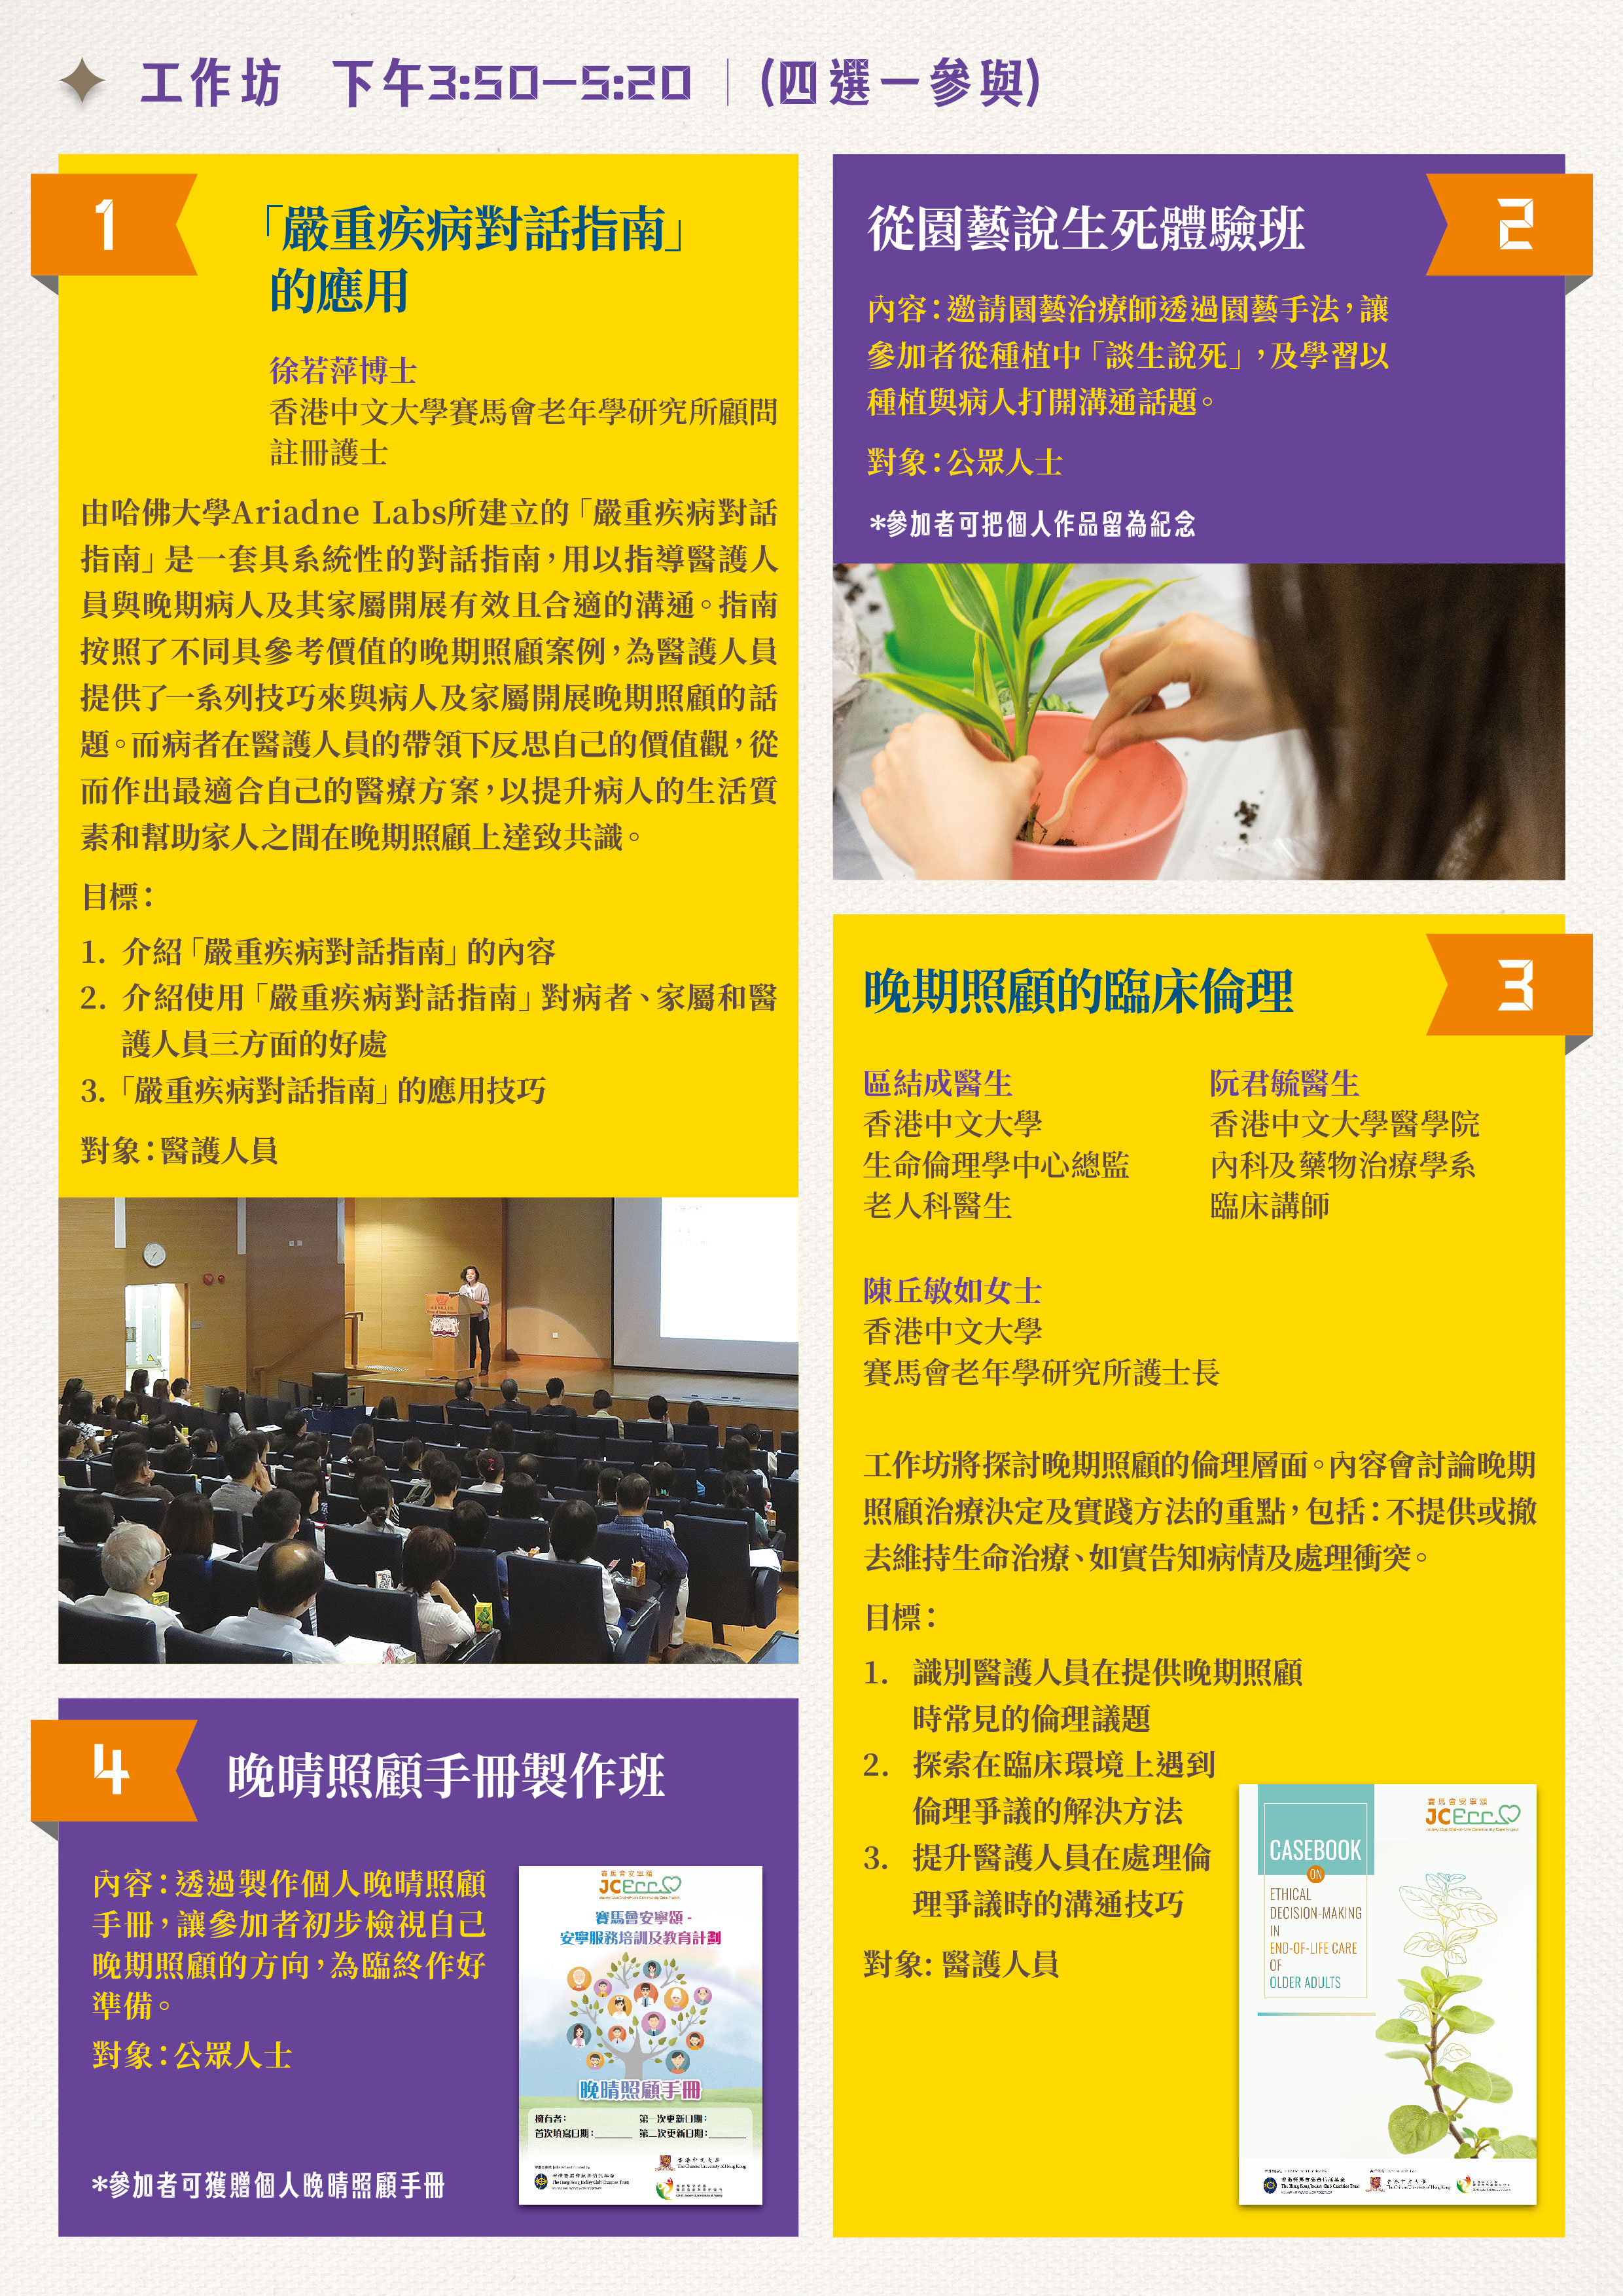 EOL chin leaflet Aug2018 2